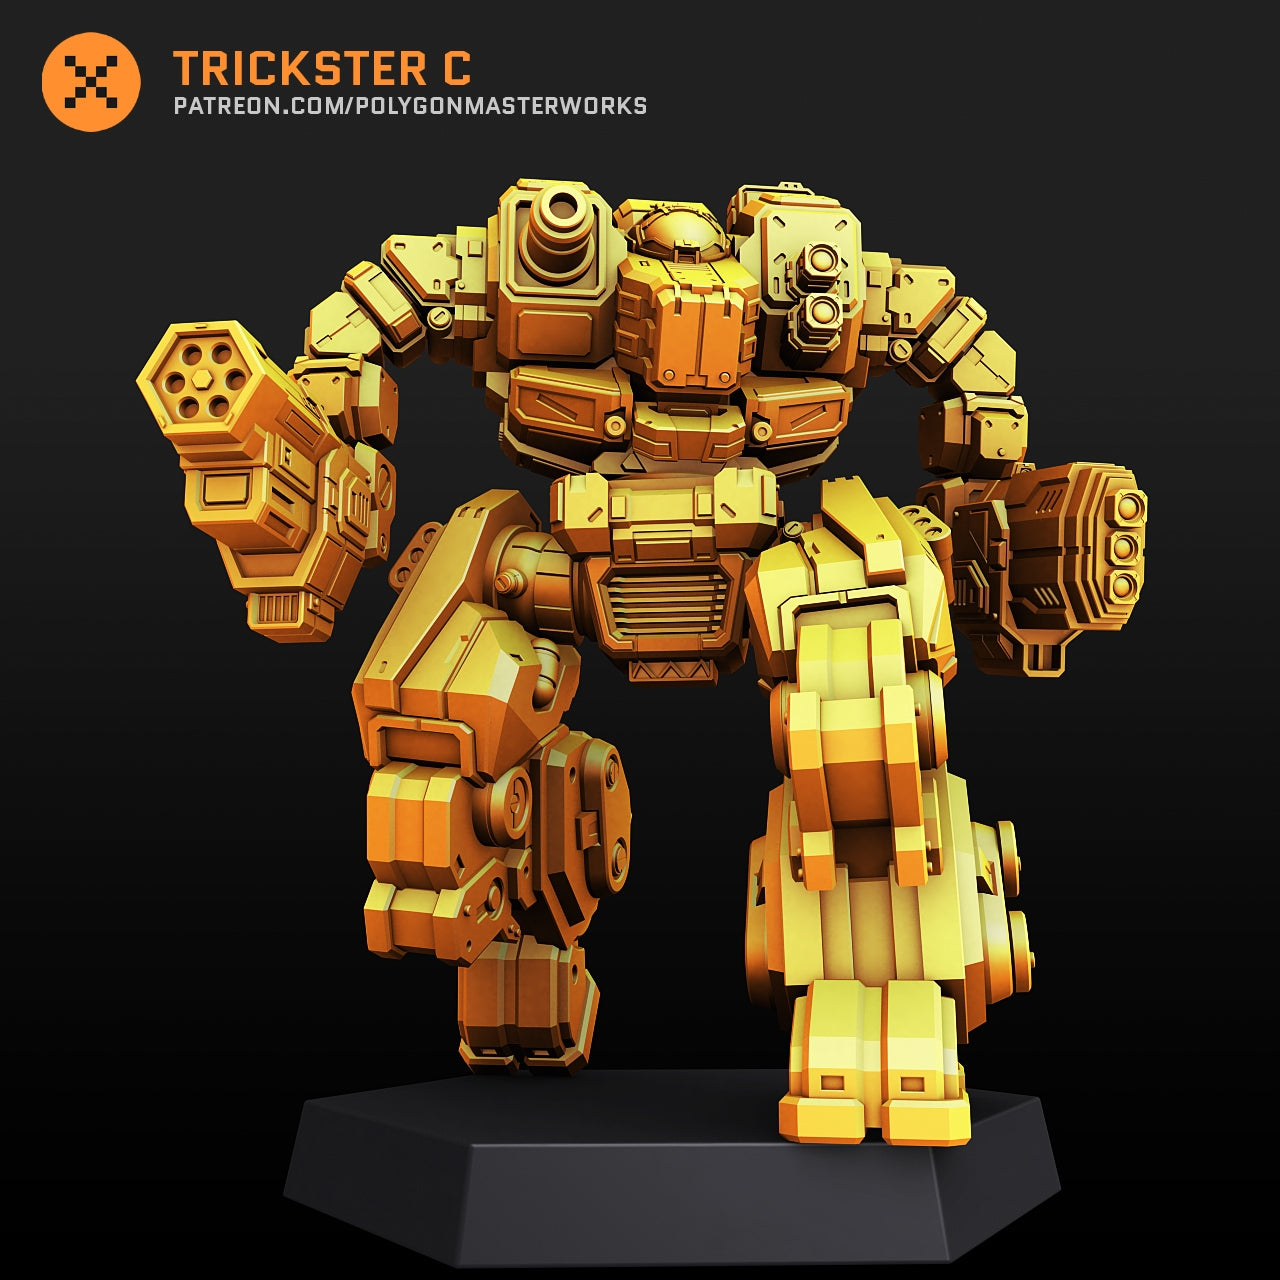 Trickster C (By PMW) Alternate Battletech Mechwarrior Miniatures